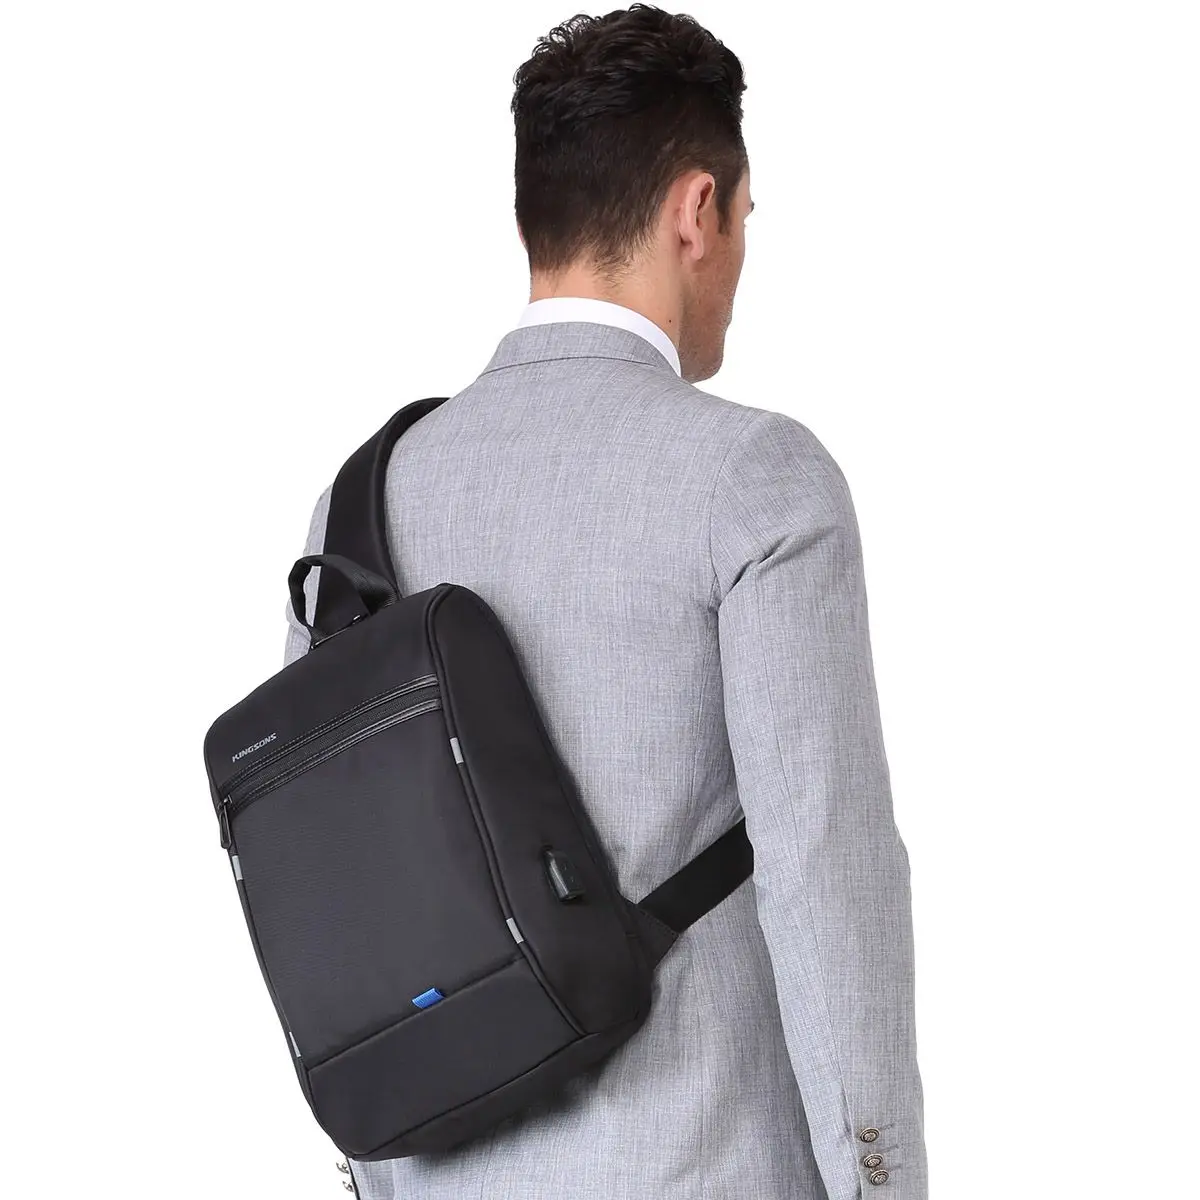 HCH-Kingsons сумки через плечо для мужчин, сумка-мессенджер, нагрудная сумка, Повседневная сумка, противоугонная usb зарядка, сумки на одно плечо